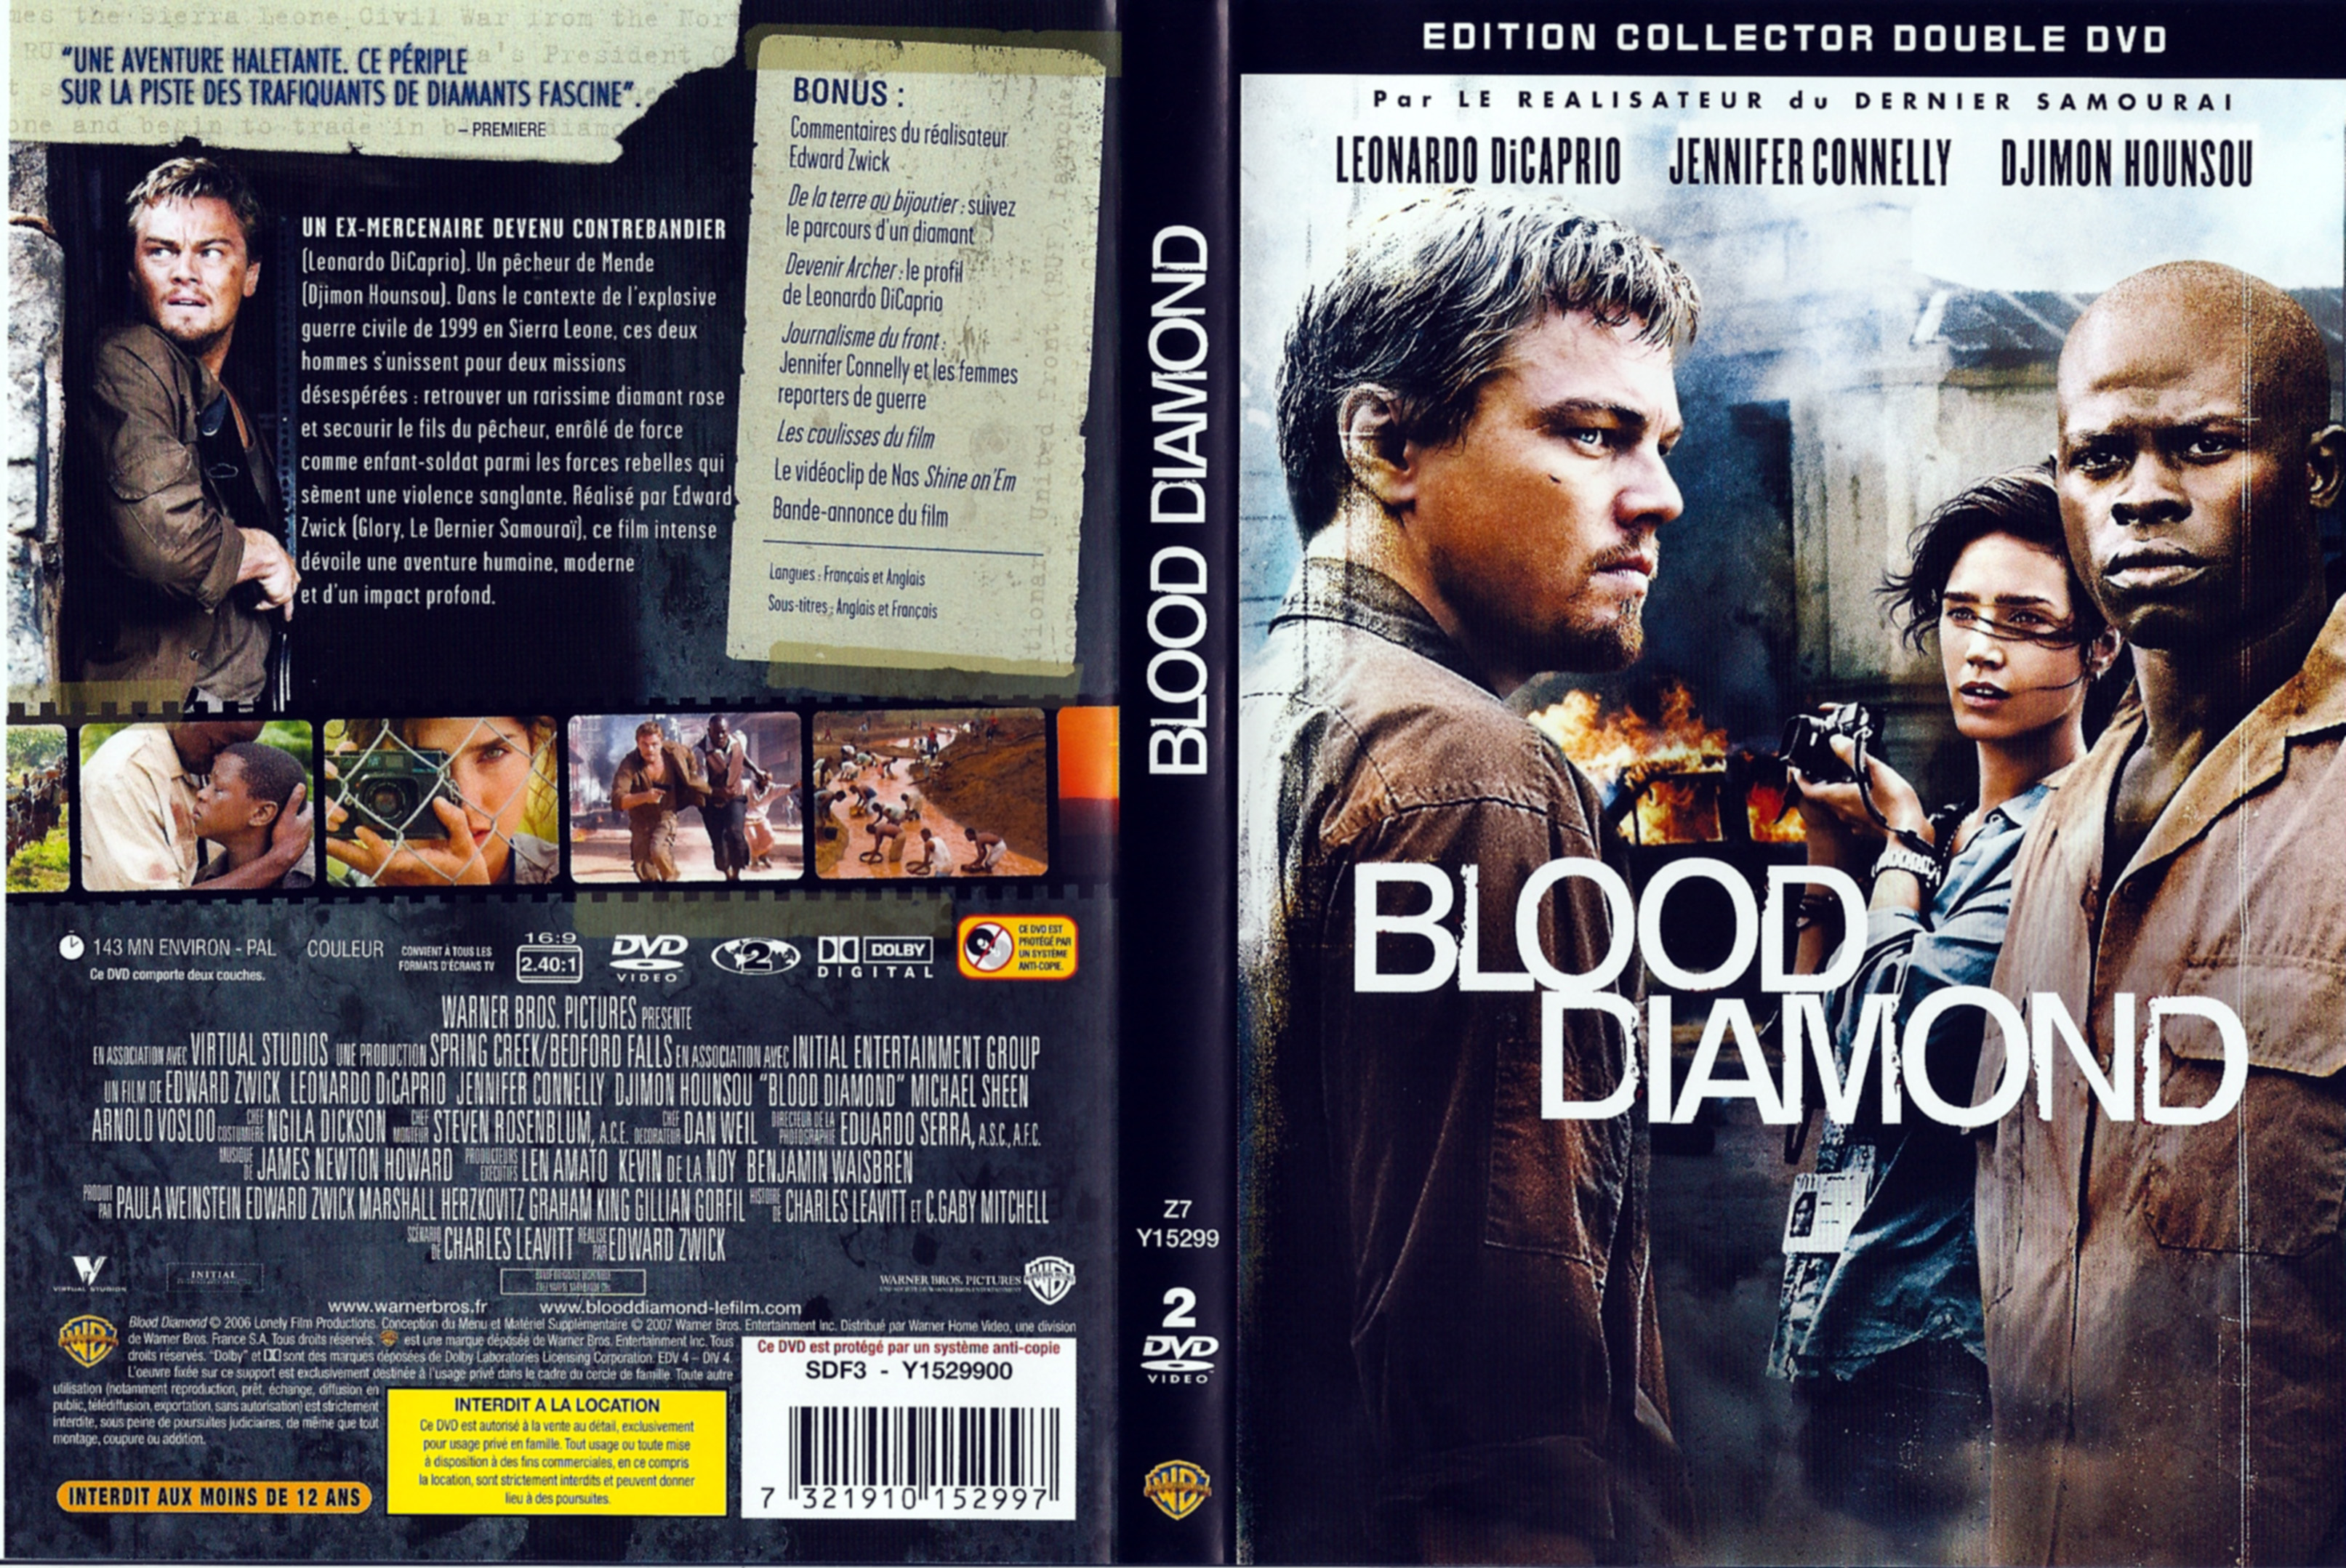 Jaquette DVD Blood diamond v2